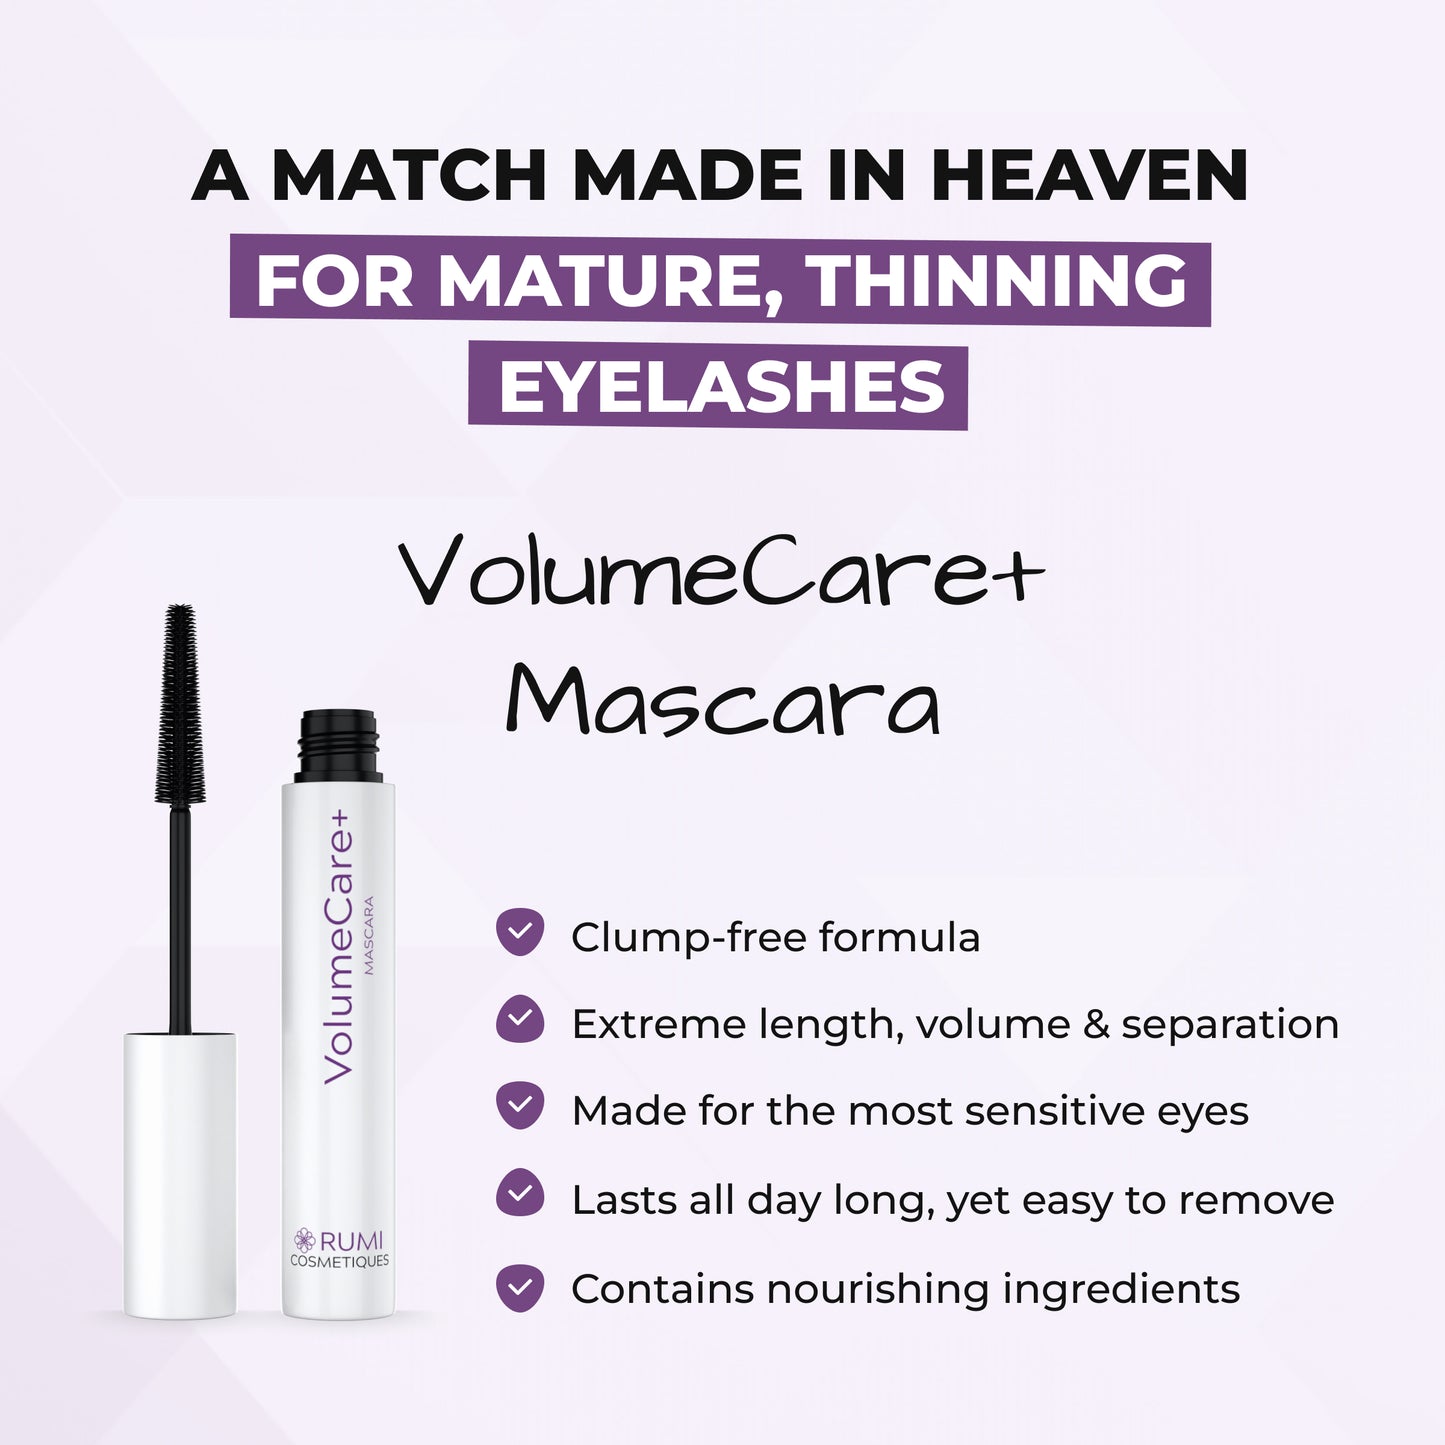 VolumeCare+ Mascara